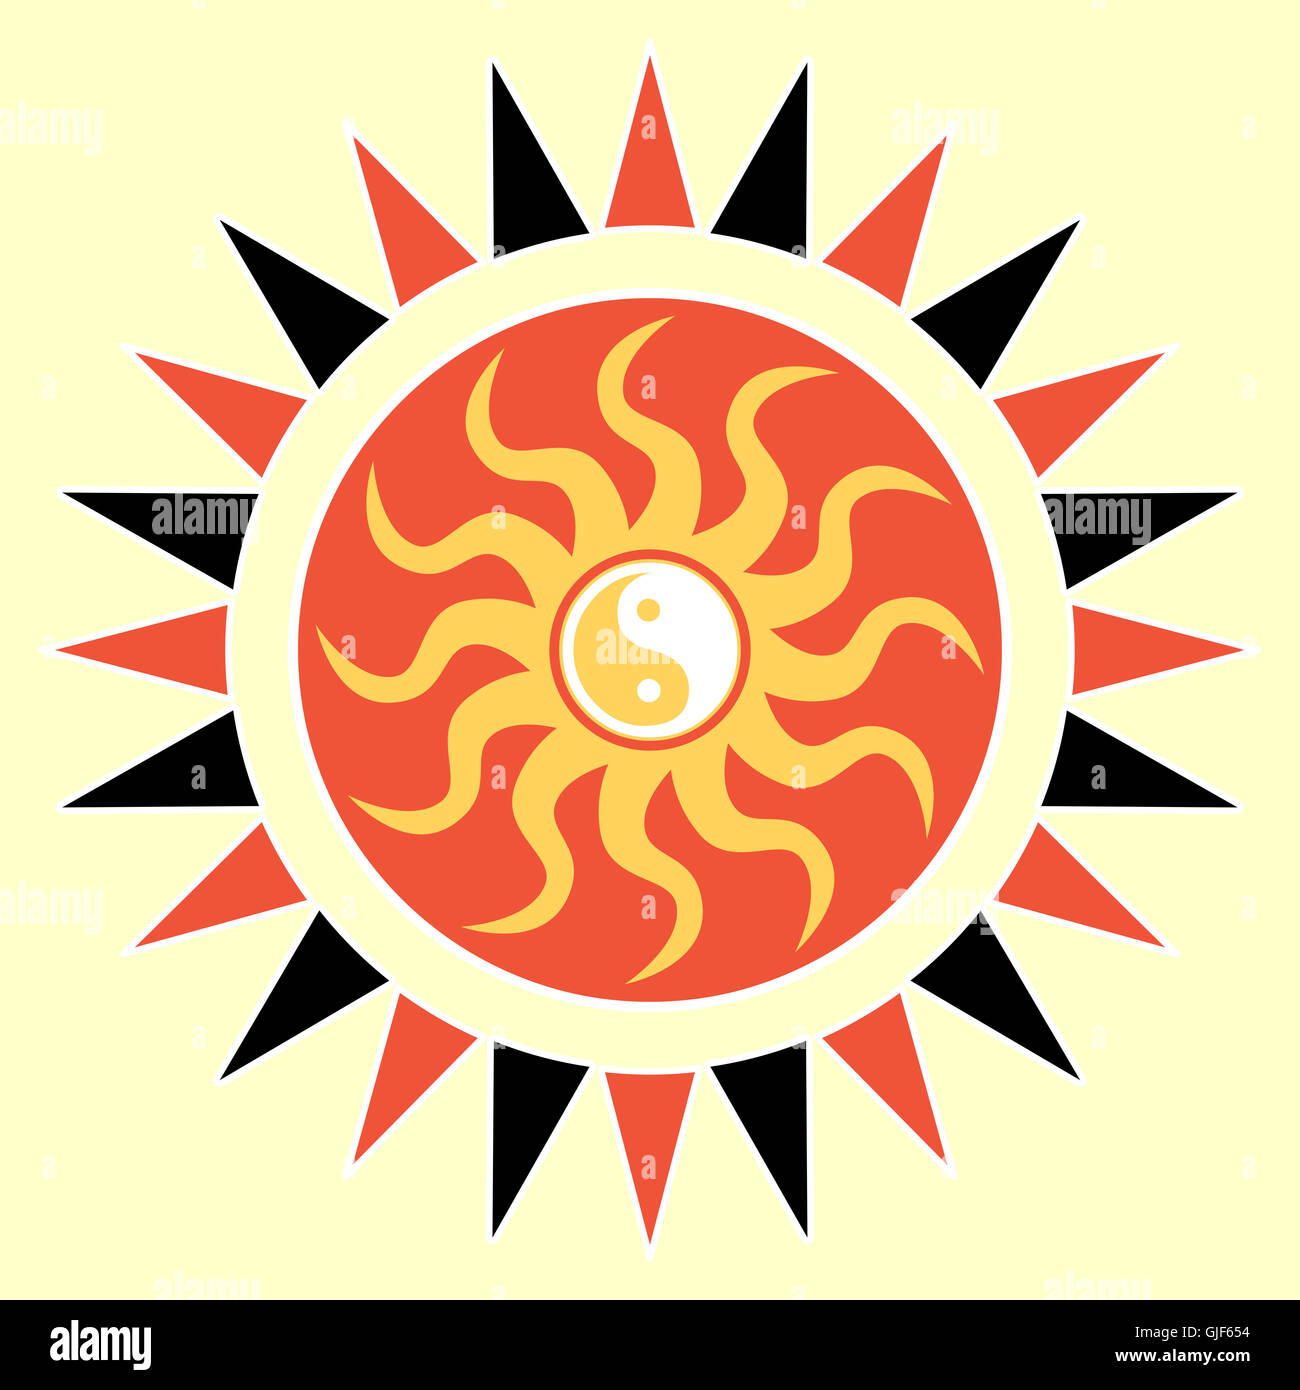 Yin yang sunshine. Geometric and inspirational graphic design based on taoism chinese philosophical tradition. Stock Photo